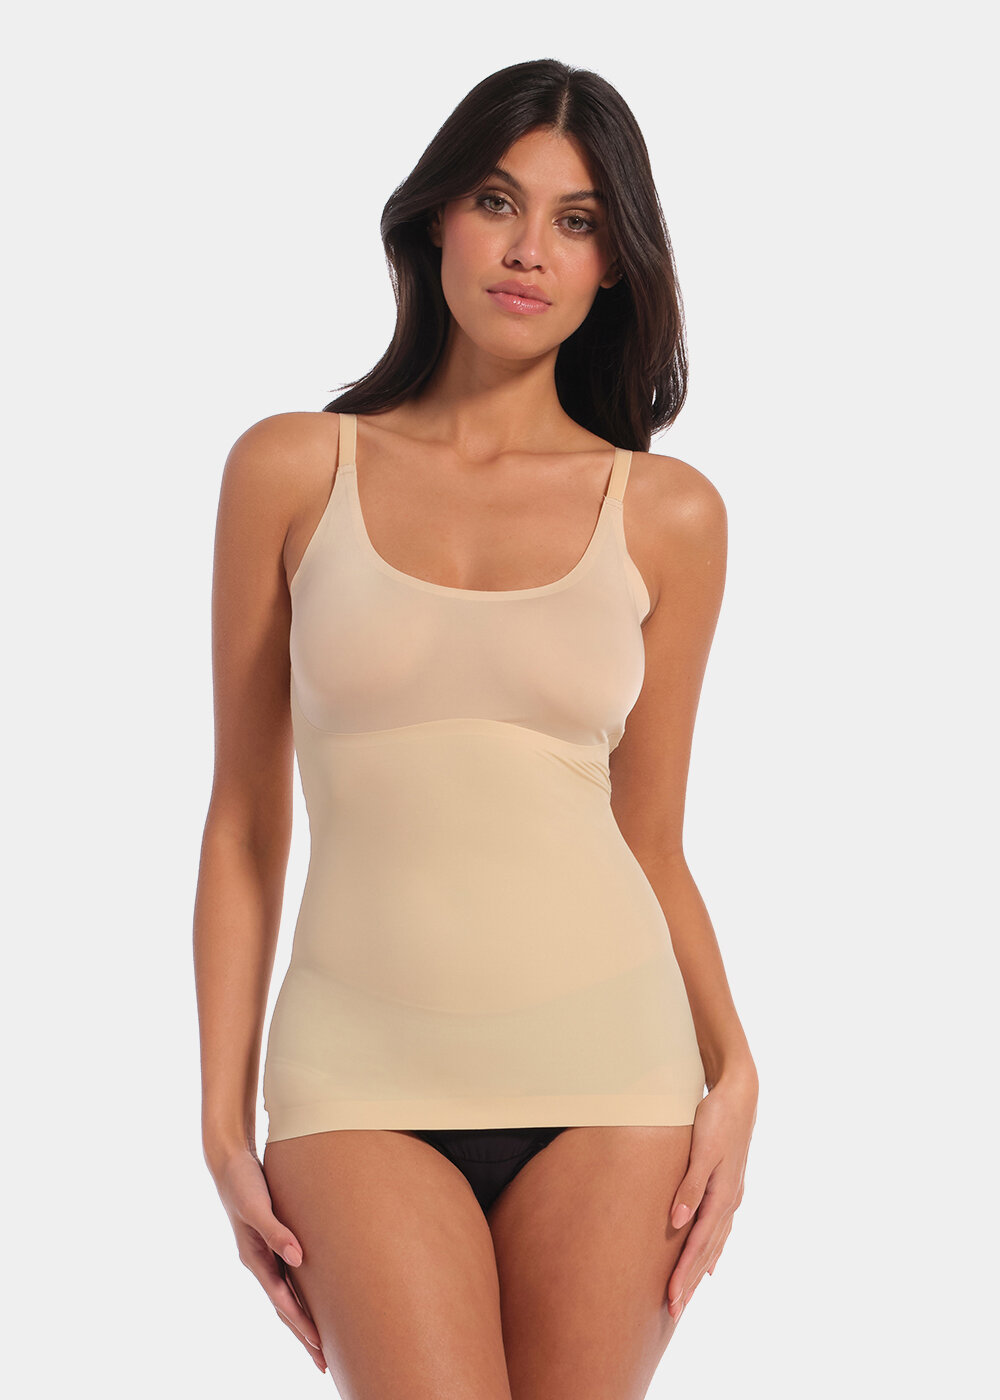 Thong Bodysuit for Women Tummy Control Backless Body Shaper, Sleeveless  Bodysuit Tank Tops (Color : White, Size : Medium)